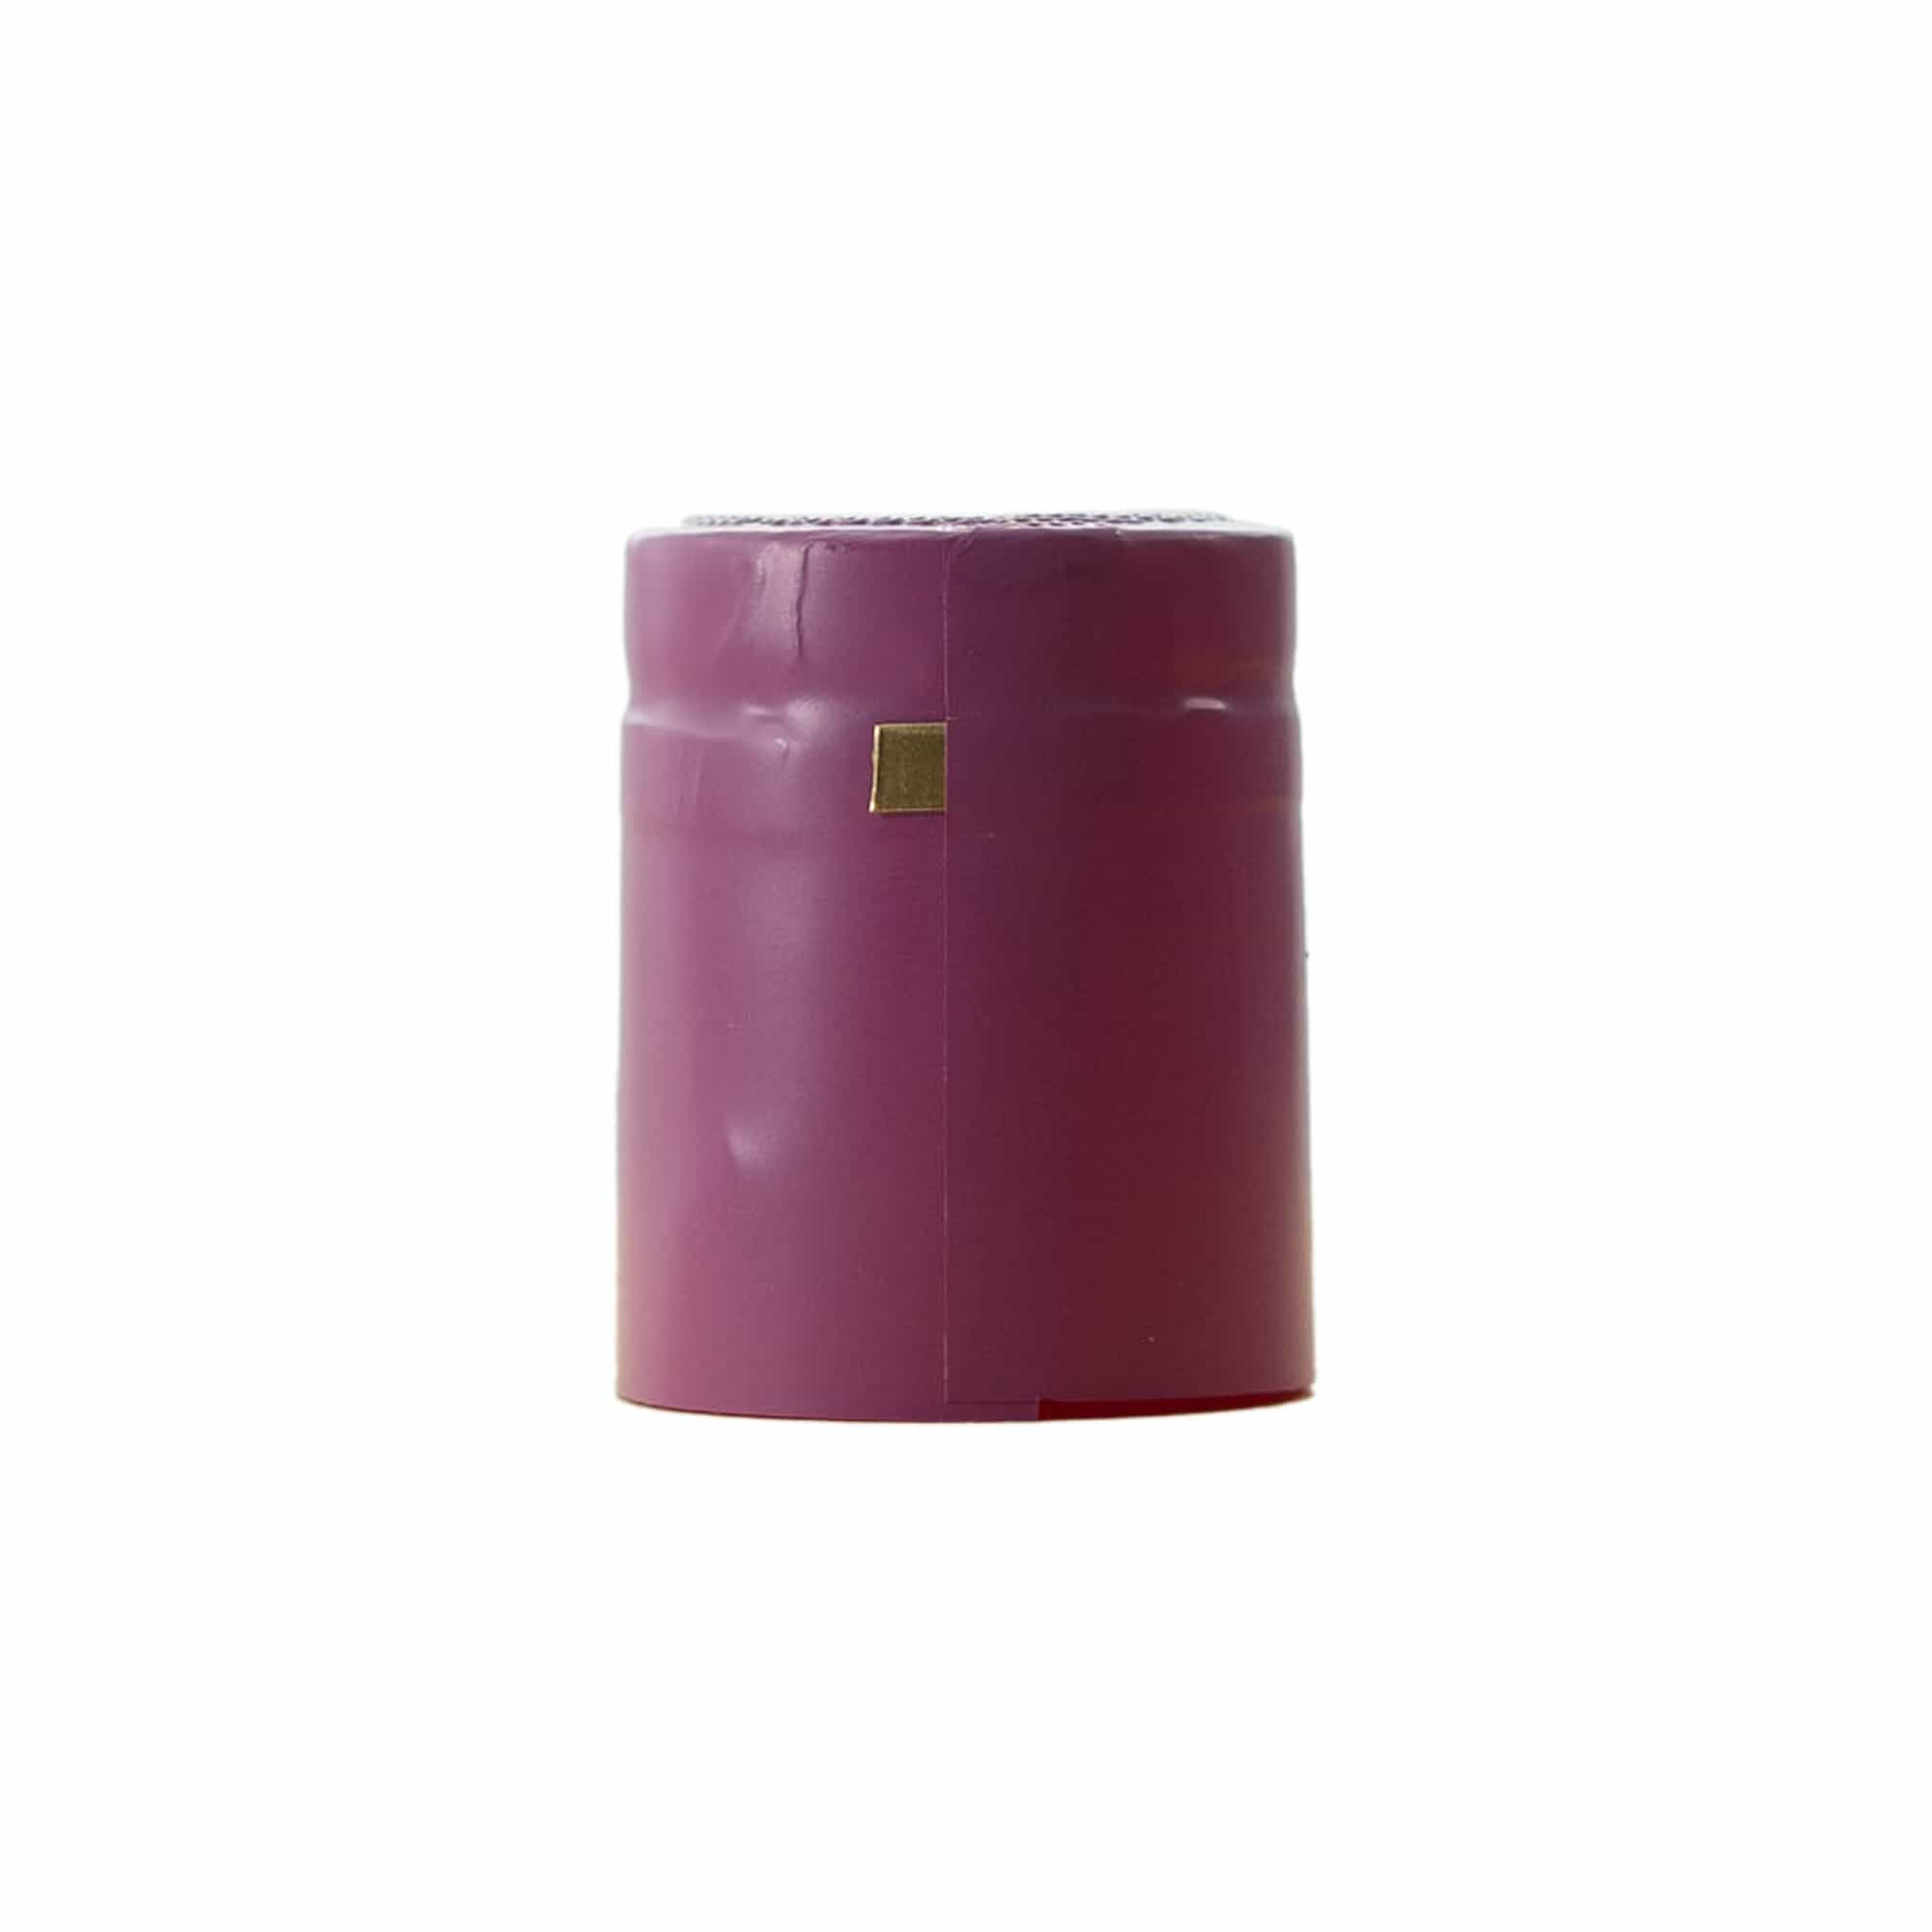 Capsule thermo-rétractable 32x41, plastique PVC, rose fuchsia